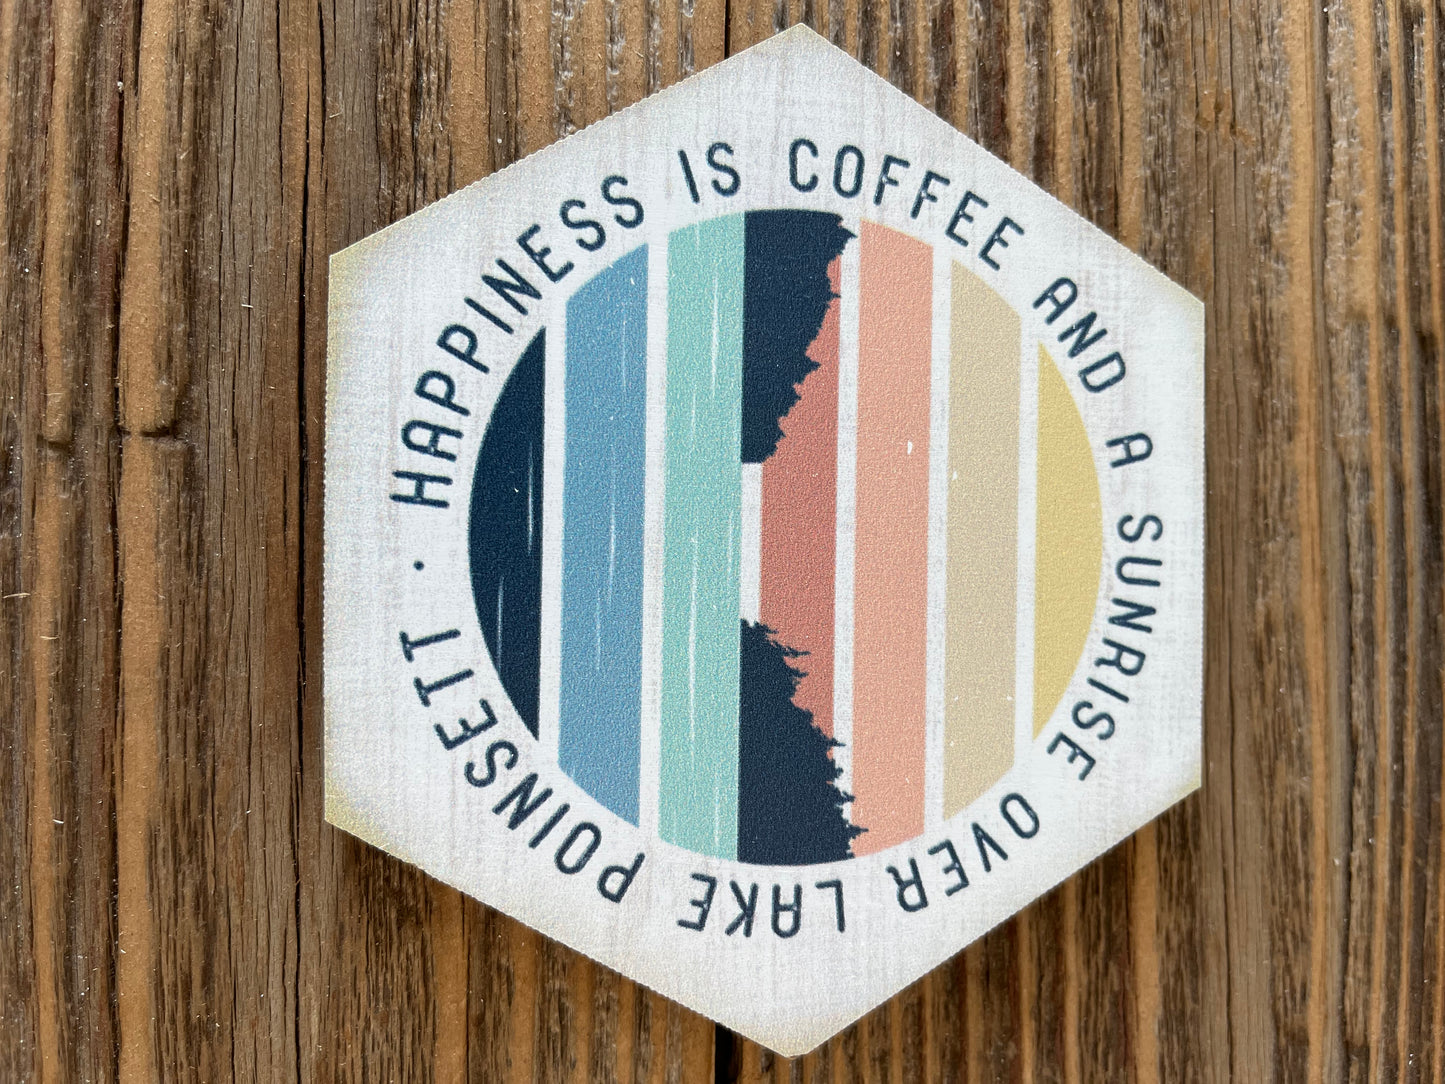 Custom Lake Coasters - Happiness is Coffee & a Sunrise